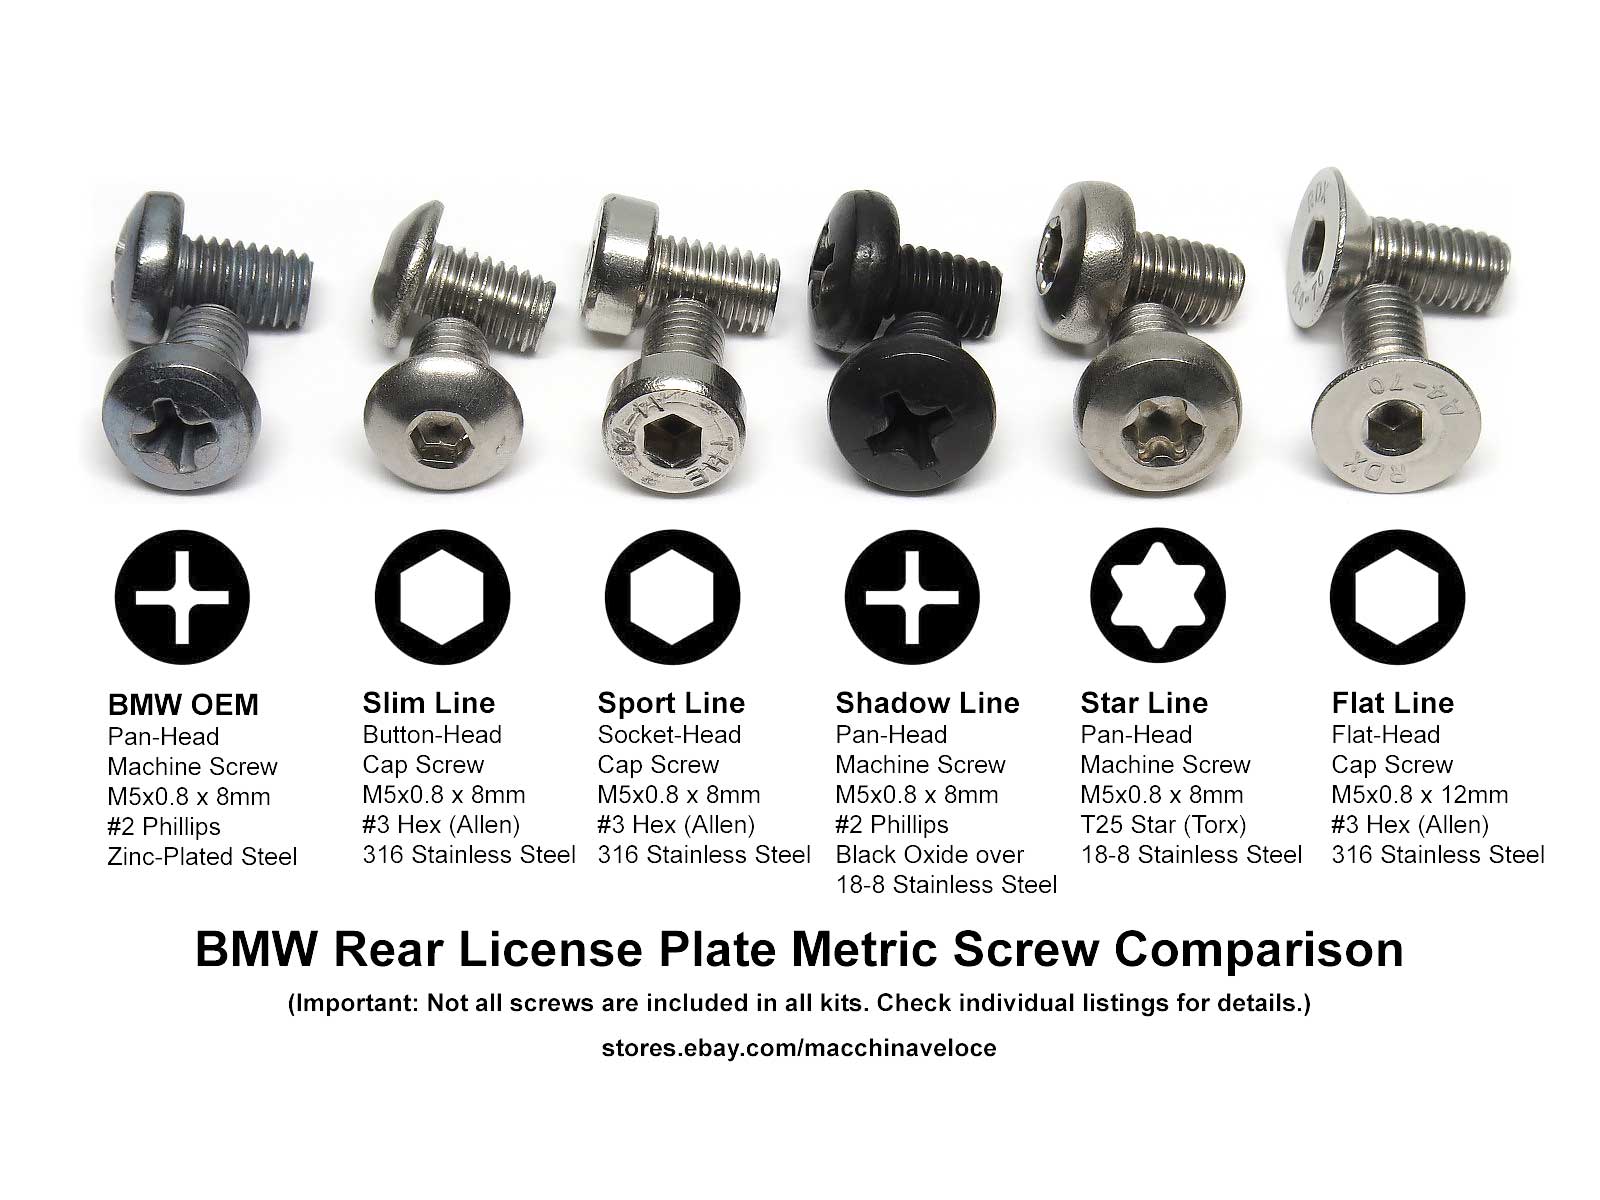 BMW rear license plate metric screw comparison